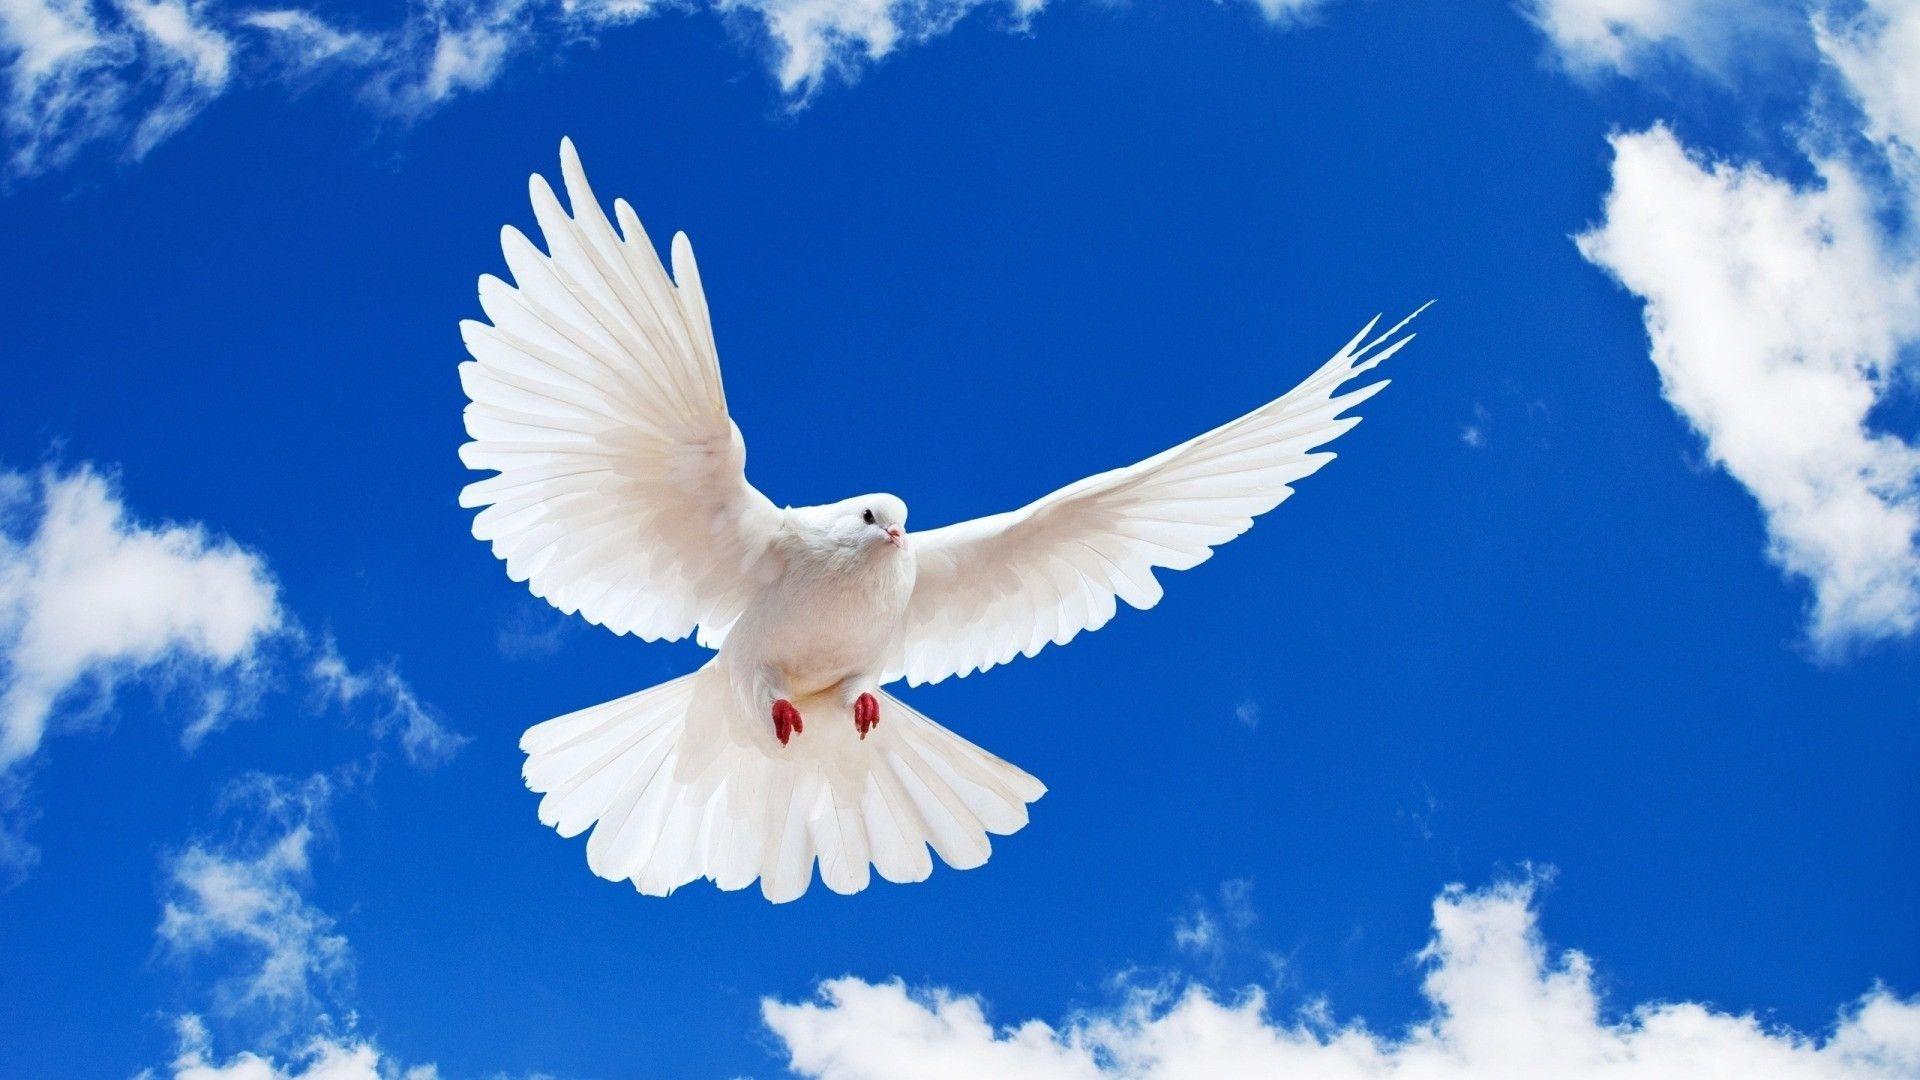 Bird of peace background 1080P, Birds HD Wallpaper For Desktop